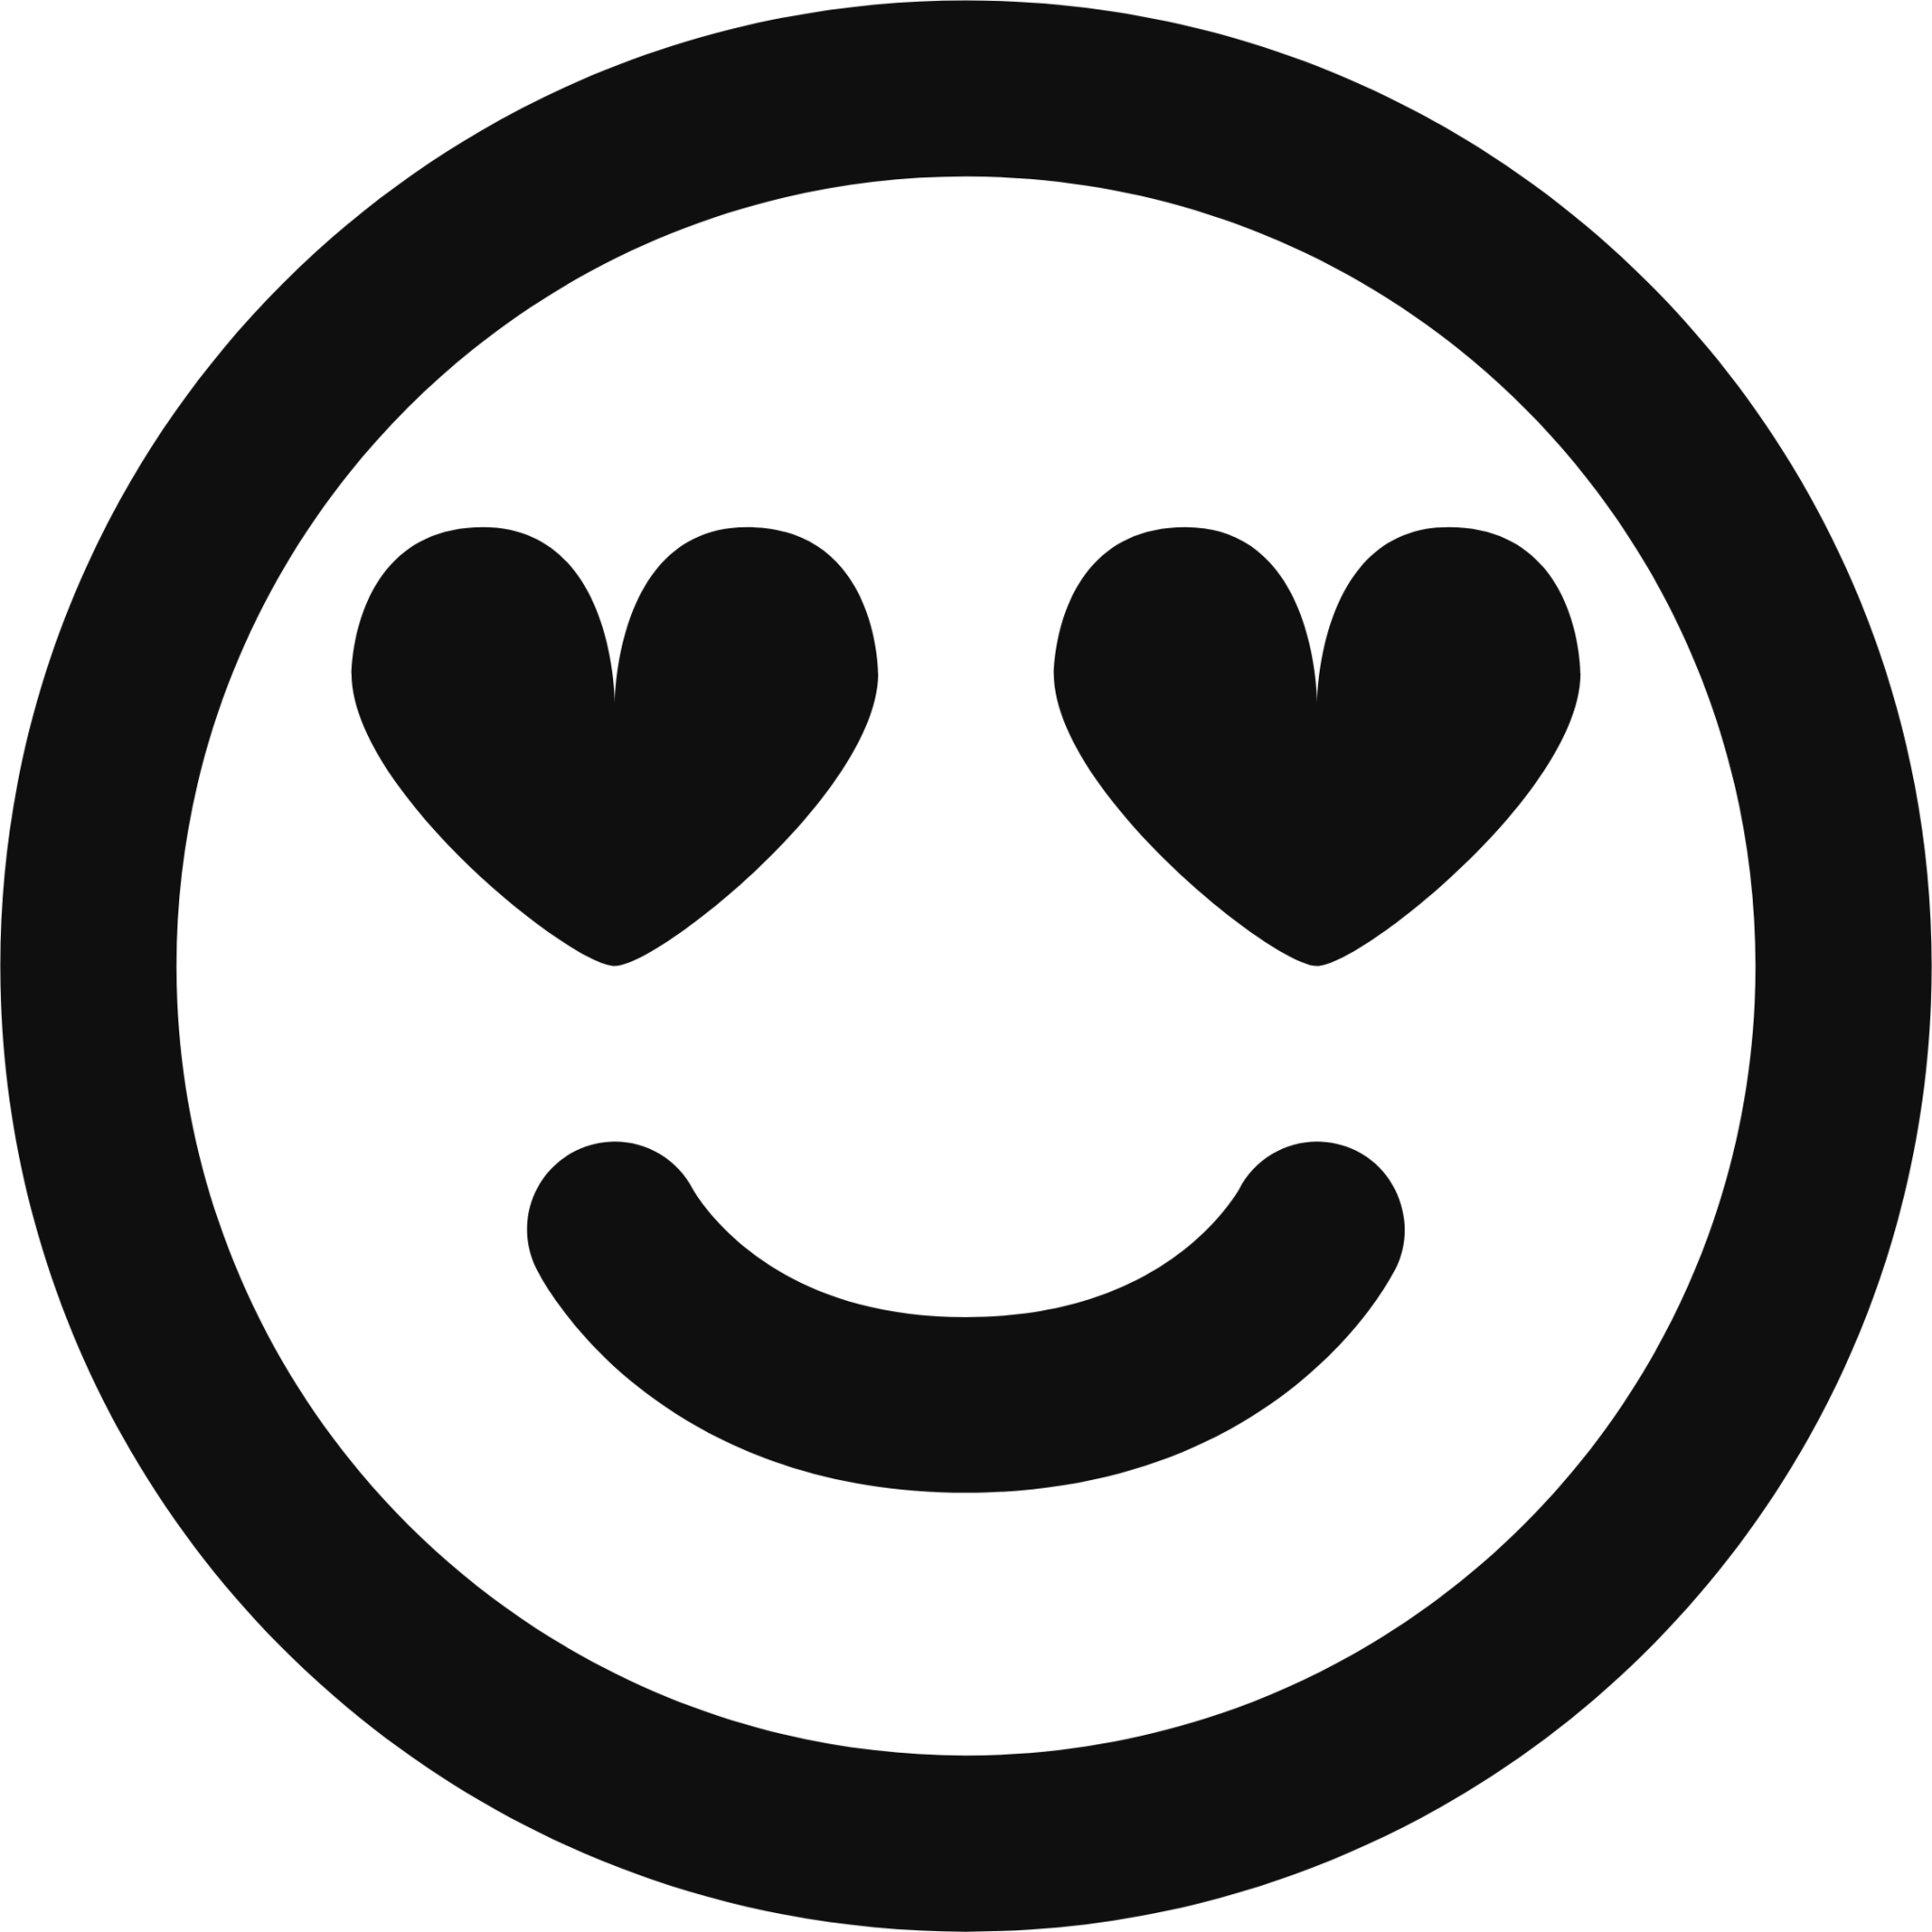 emoji love icon